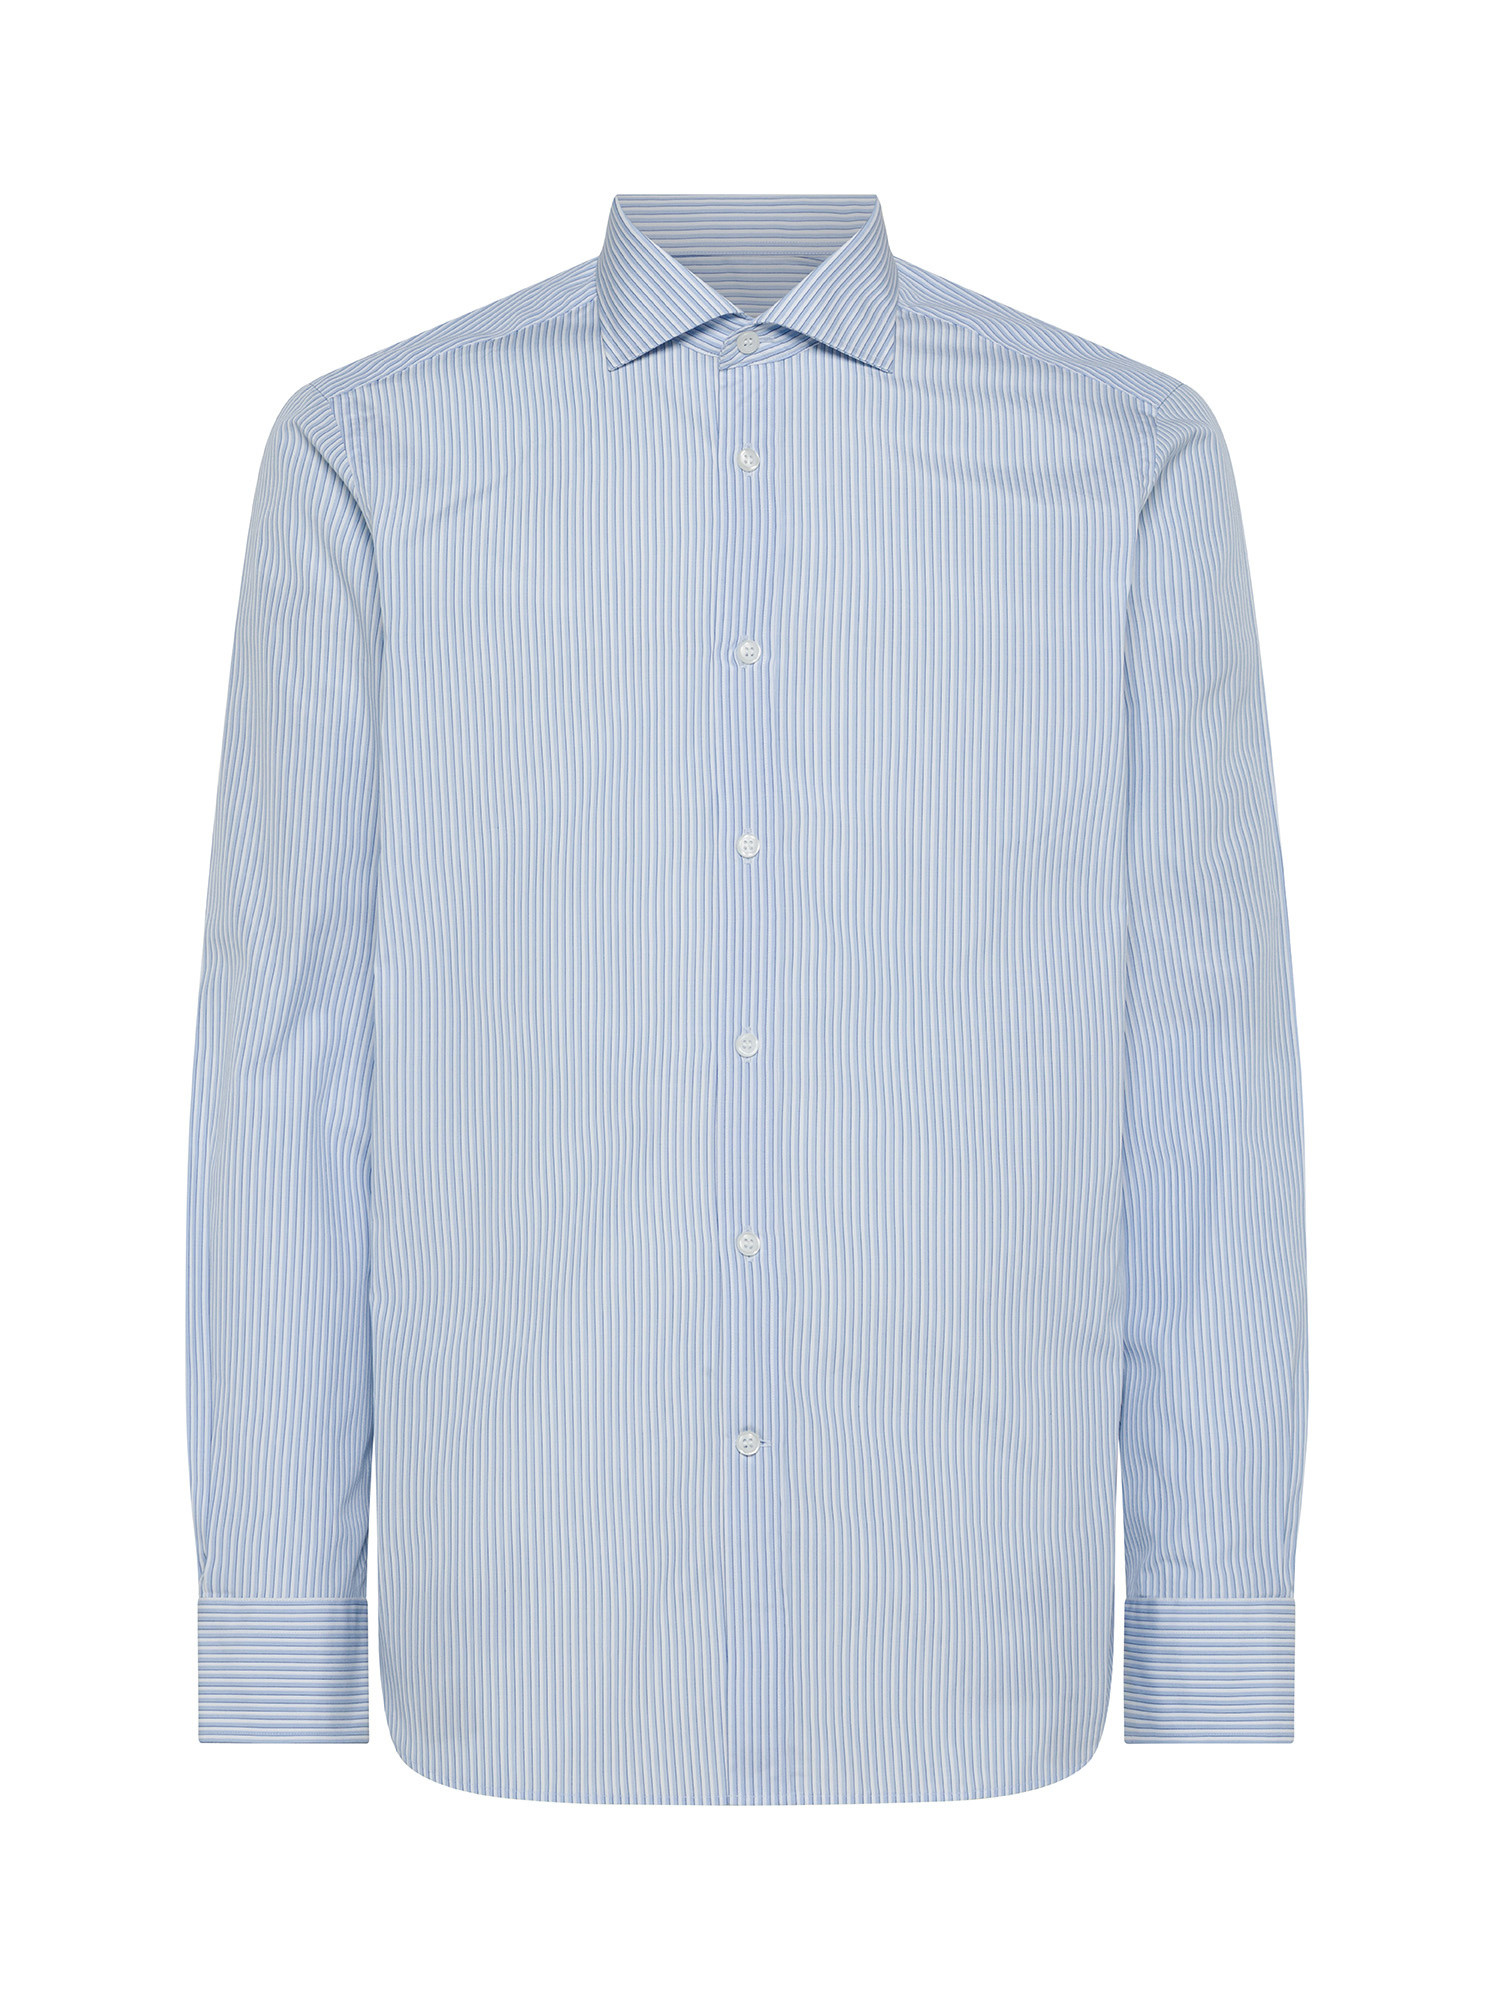 Luca D'Altieri - Camicia slim fit in puro cotone, Azzurro, large image number 0